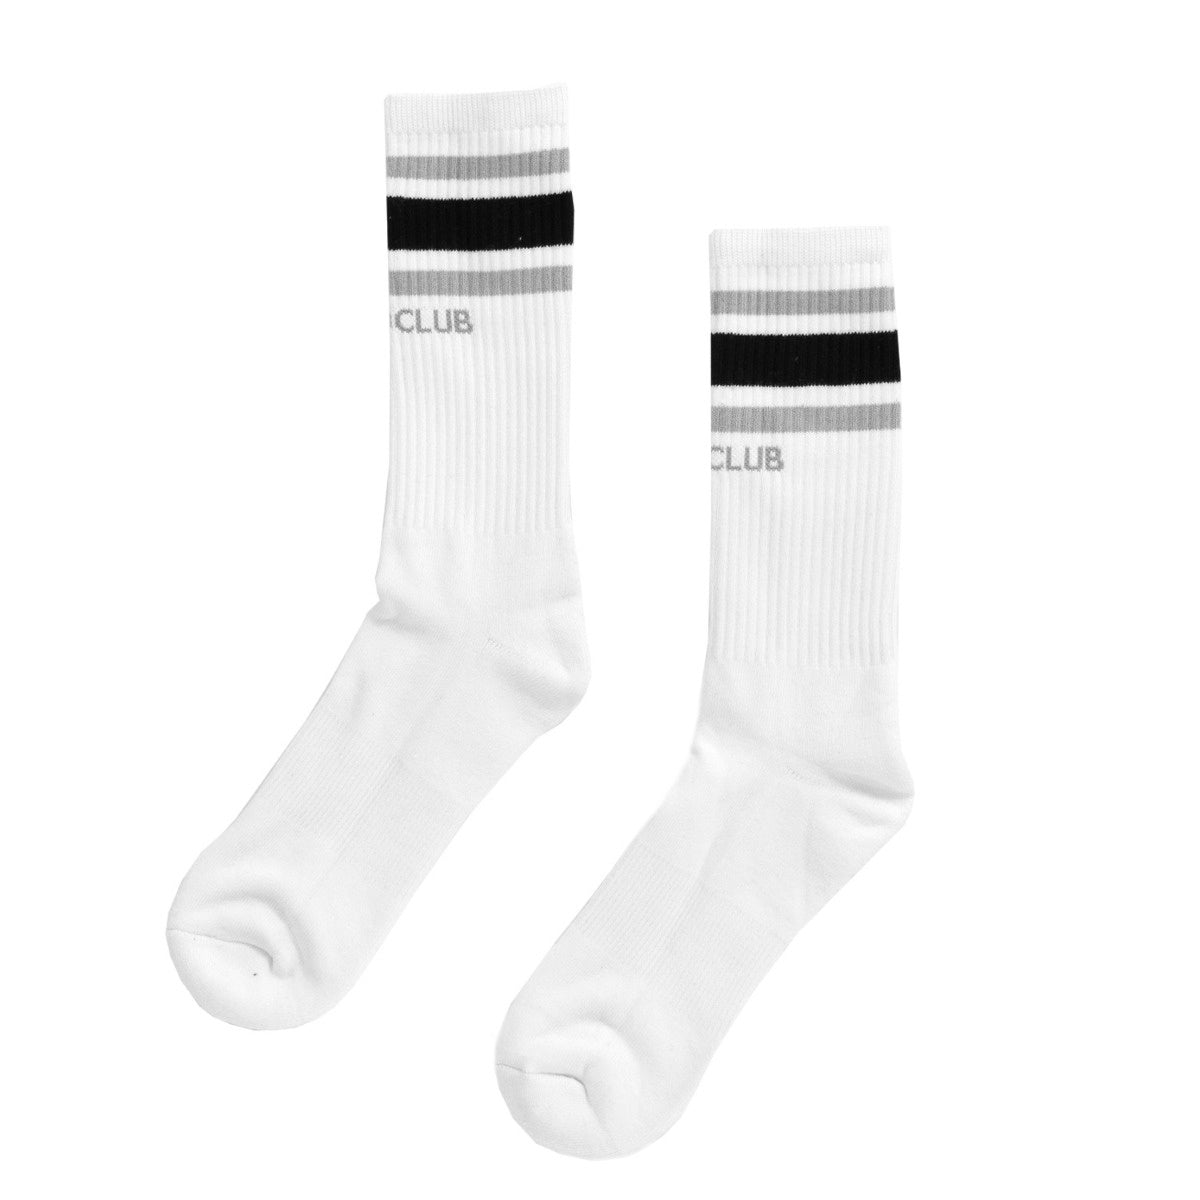 Pro Club Stripe Crew Sock - White/Black/Gray